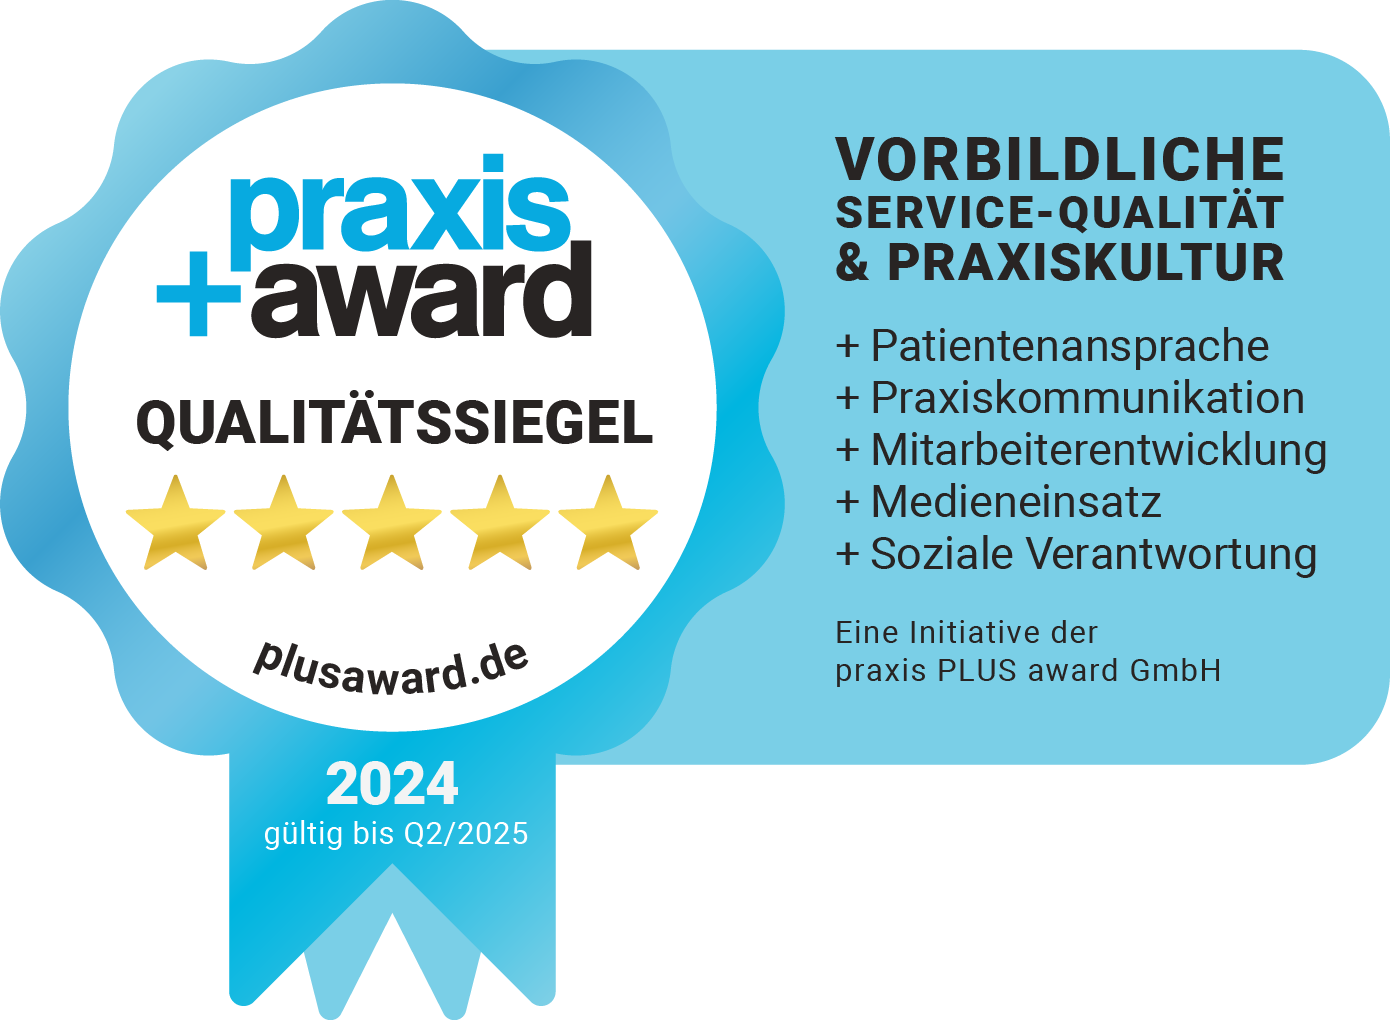 Praxis+Award 2024